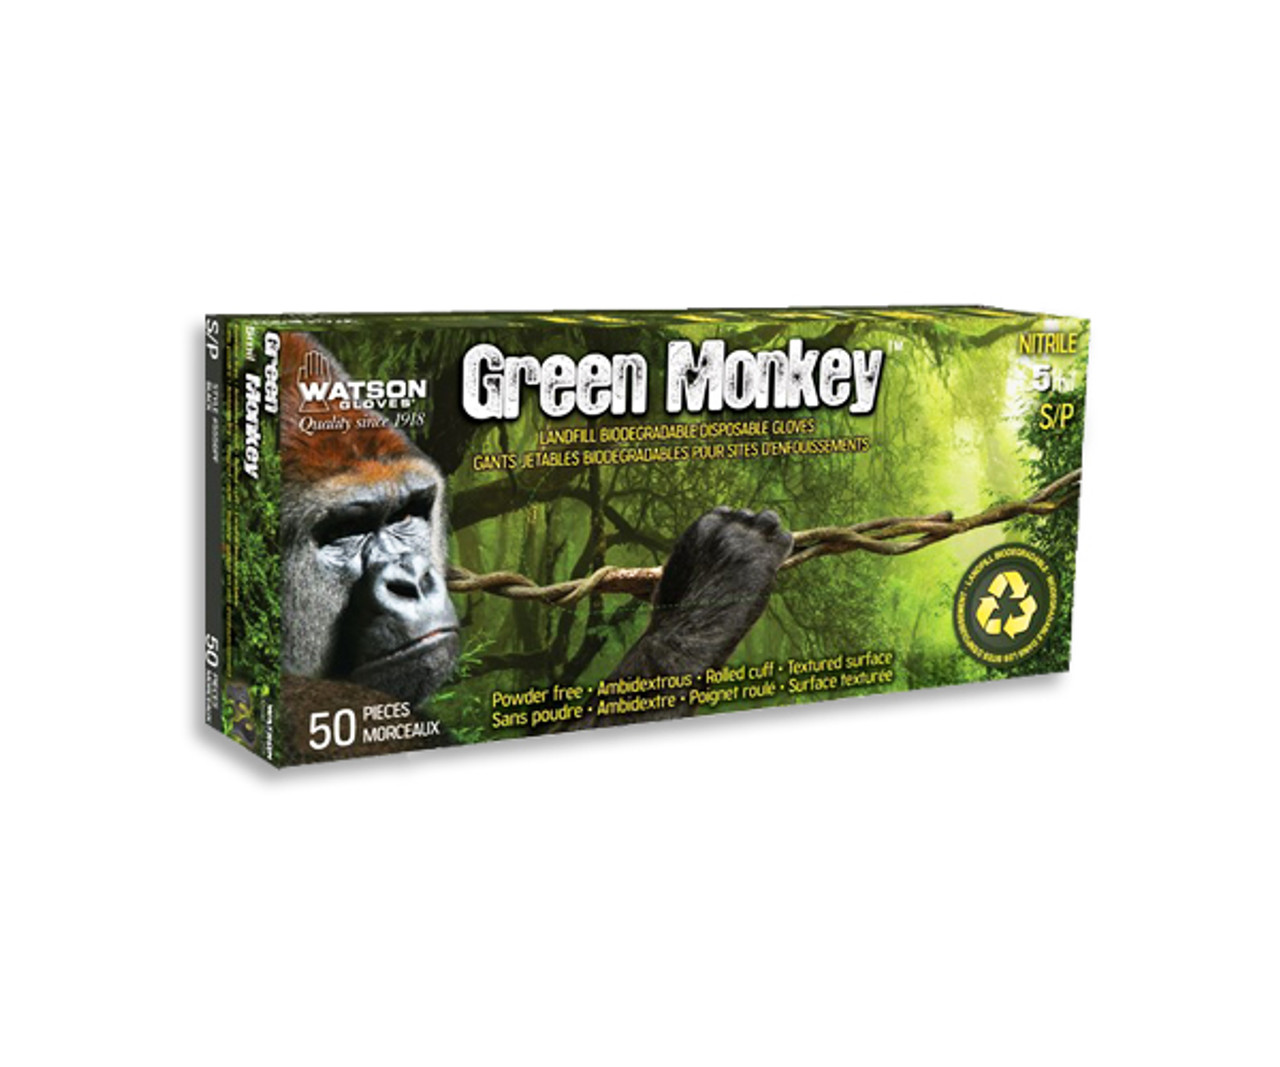 Watson Gloves Green Monkey Biodegradable Powder Free Nitrile Gloves Large 5 mil Black Box of 50